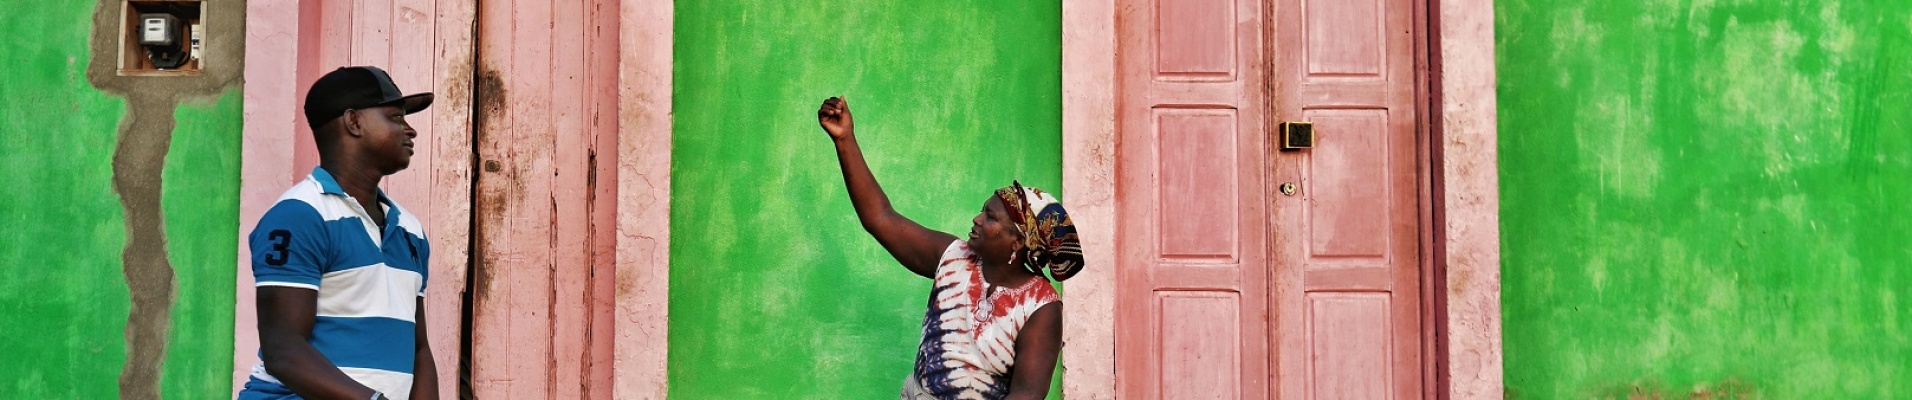 Habitants discutent dans la rue, île de Maio, Cap-Vert